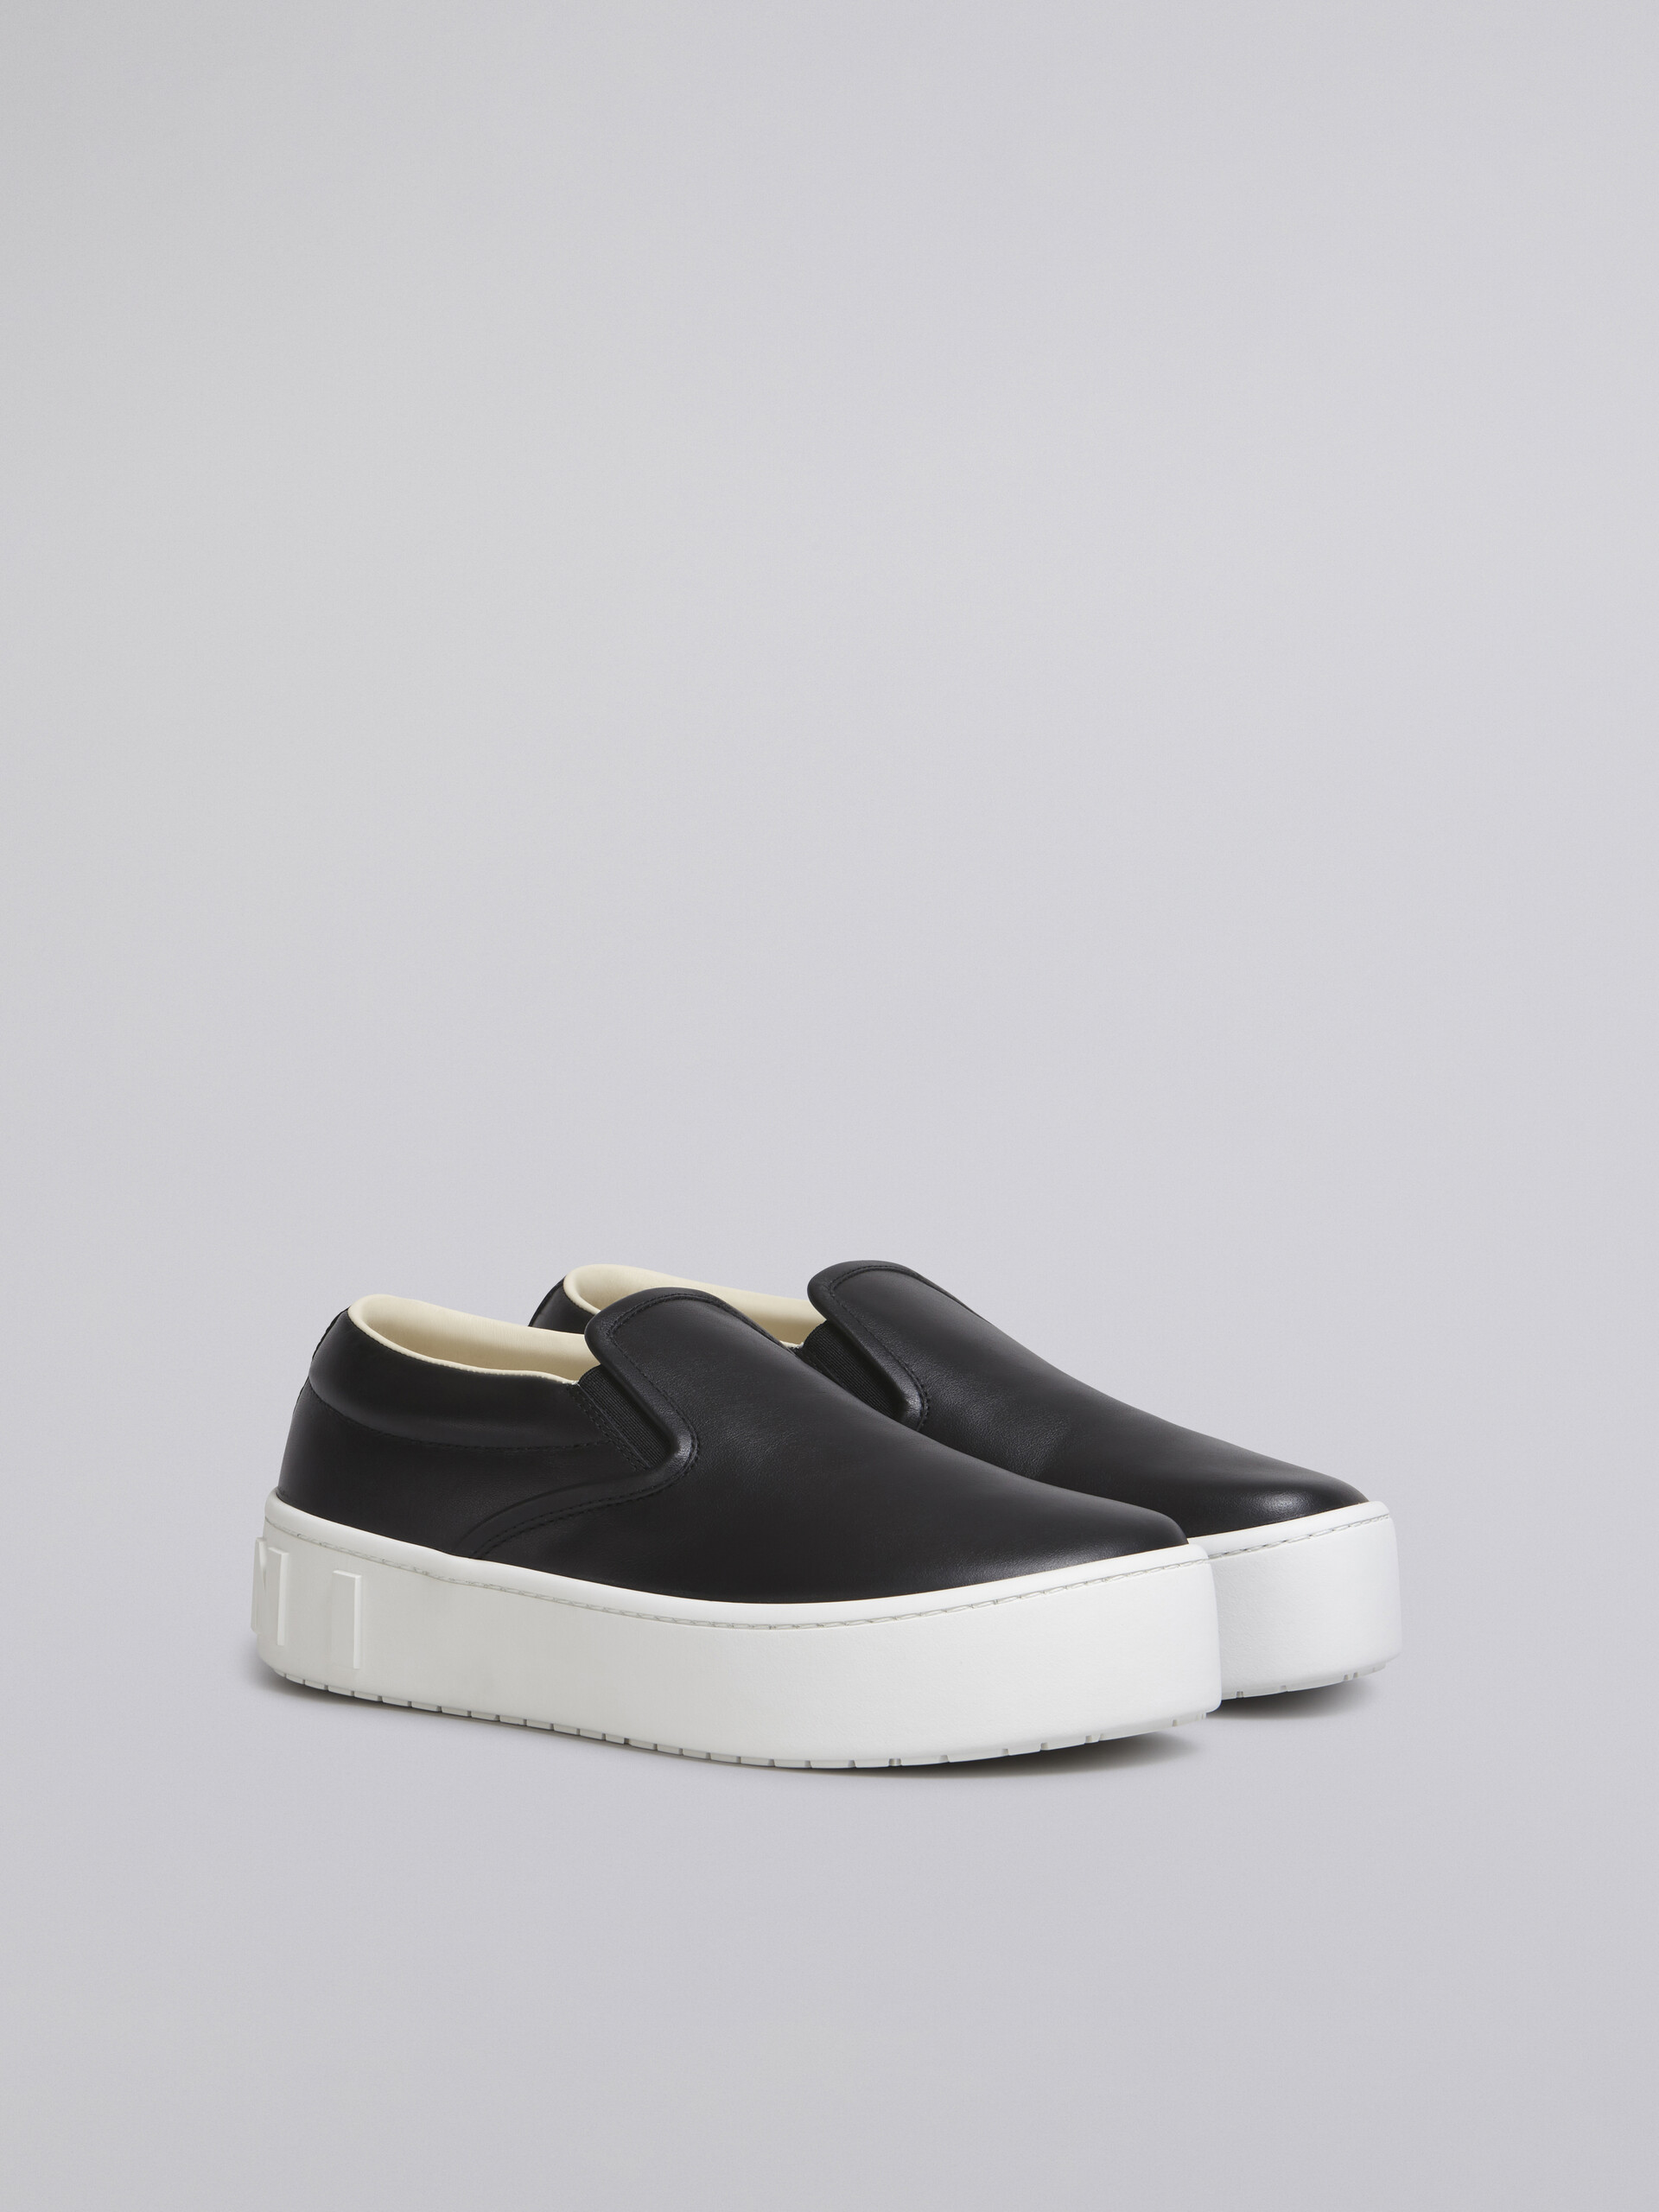 Black calfskin slip-on sneaker with raised maxi Marni logo - Sneakers - Image 2